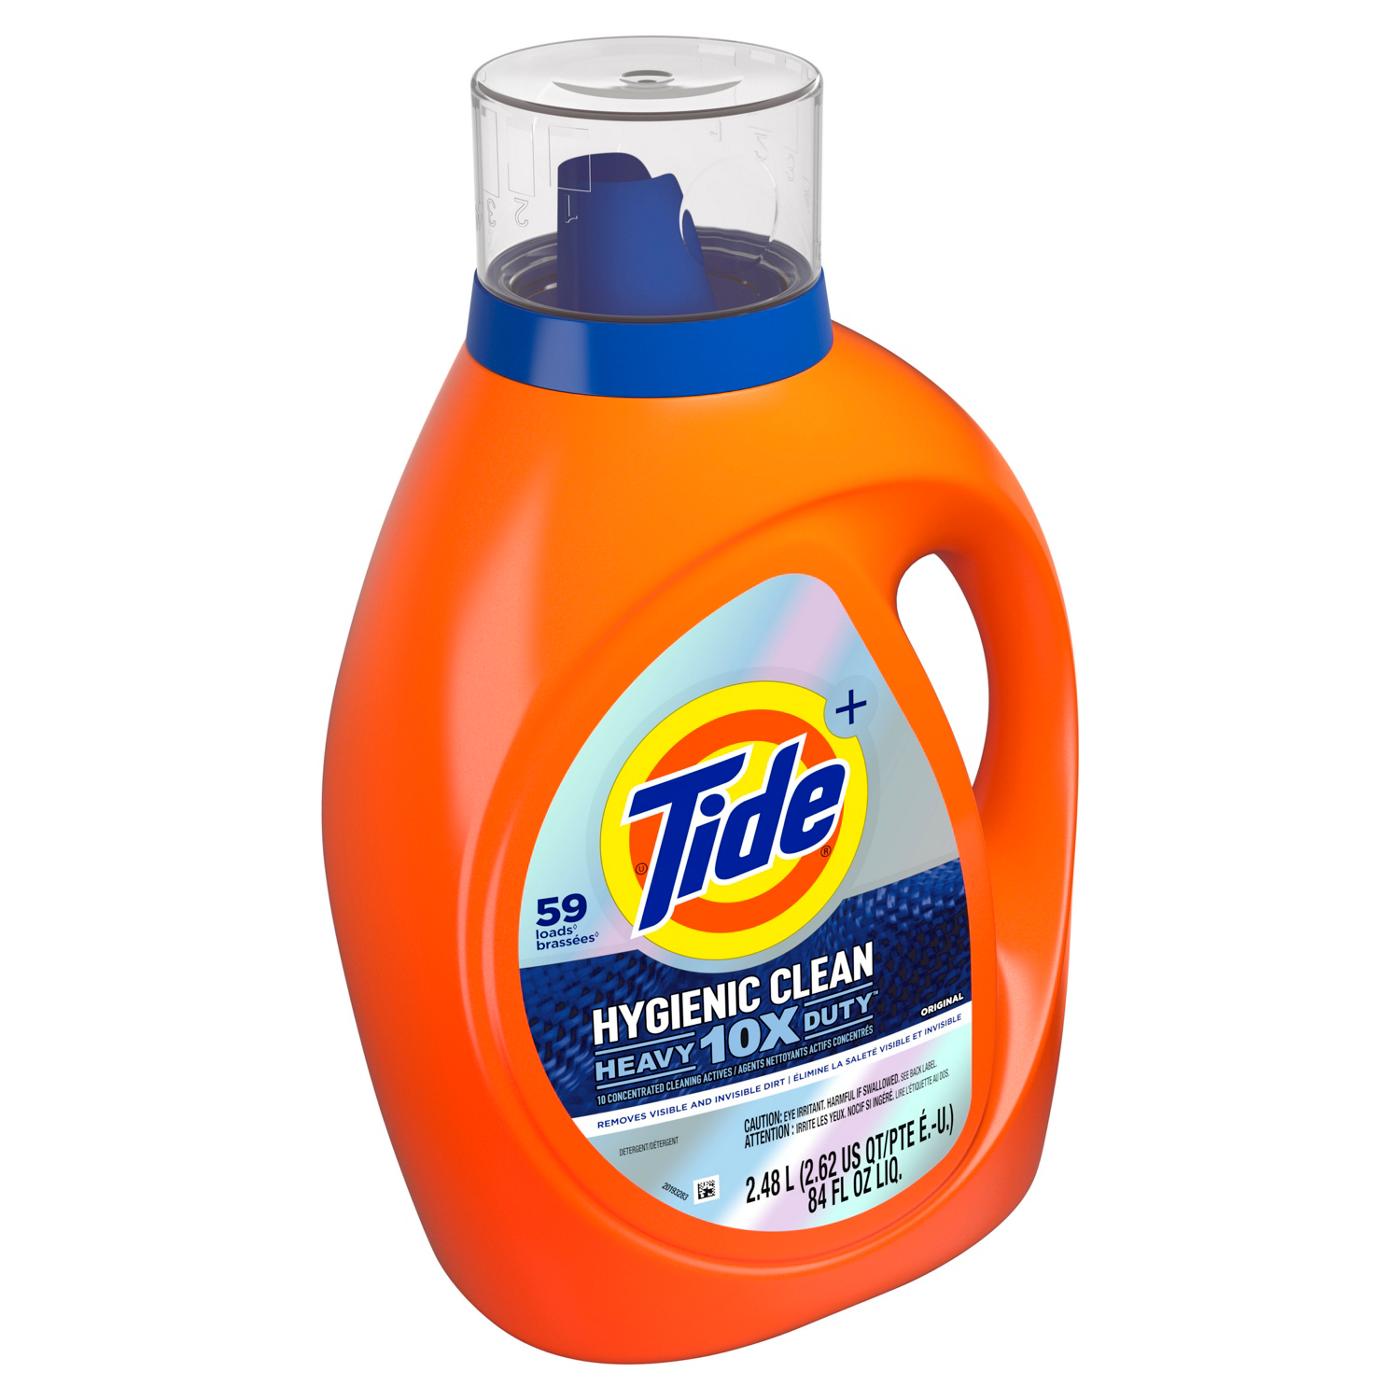 Tide + Hygienic Clean HE Turbo Clean Liquid Laundry Detergent, 59 Loads - Original; image 4 of 11